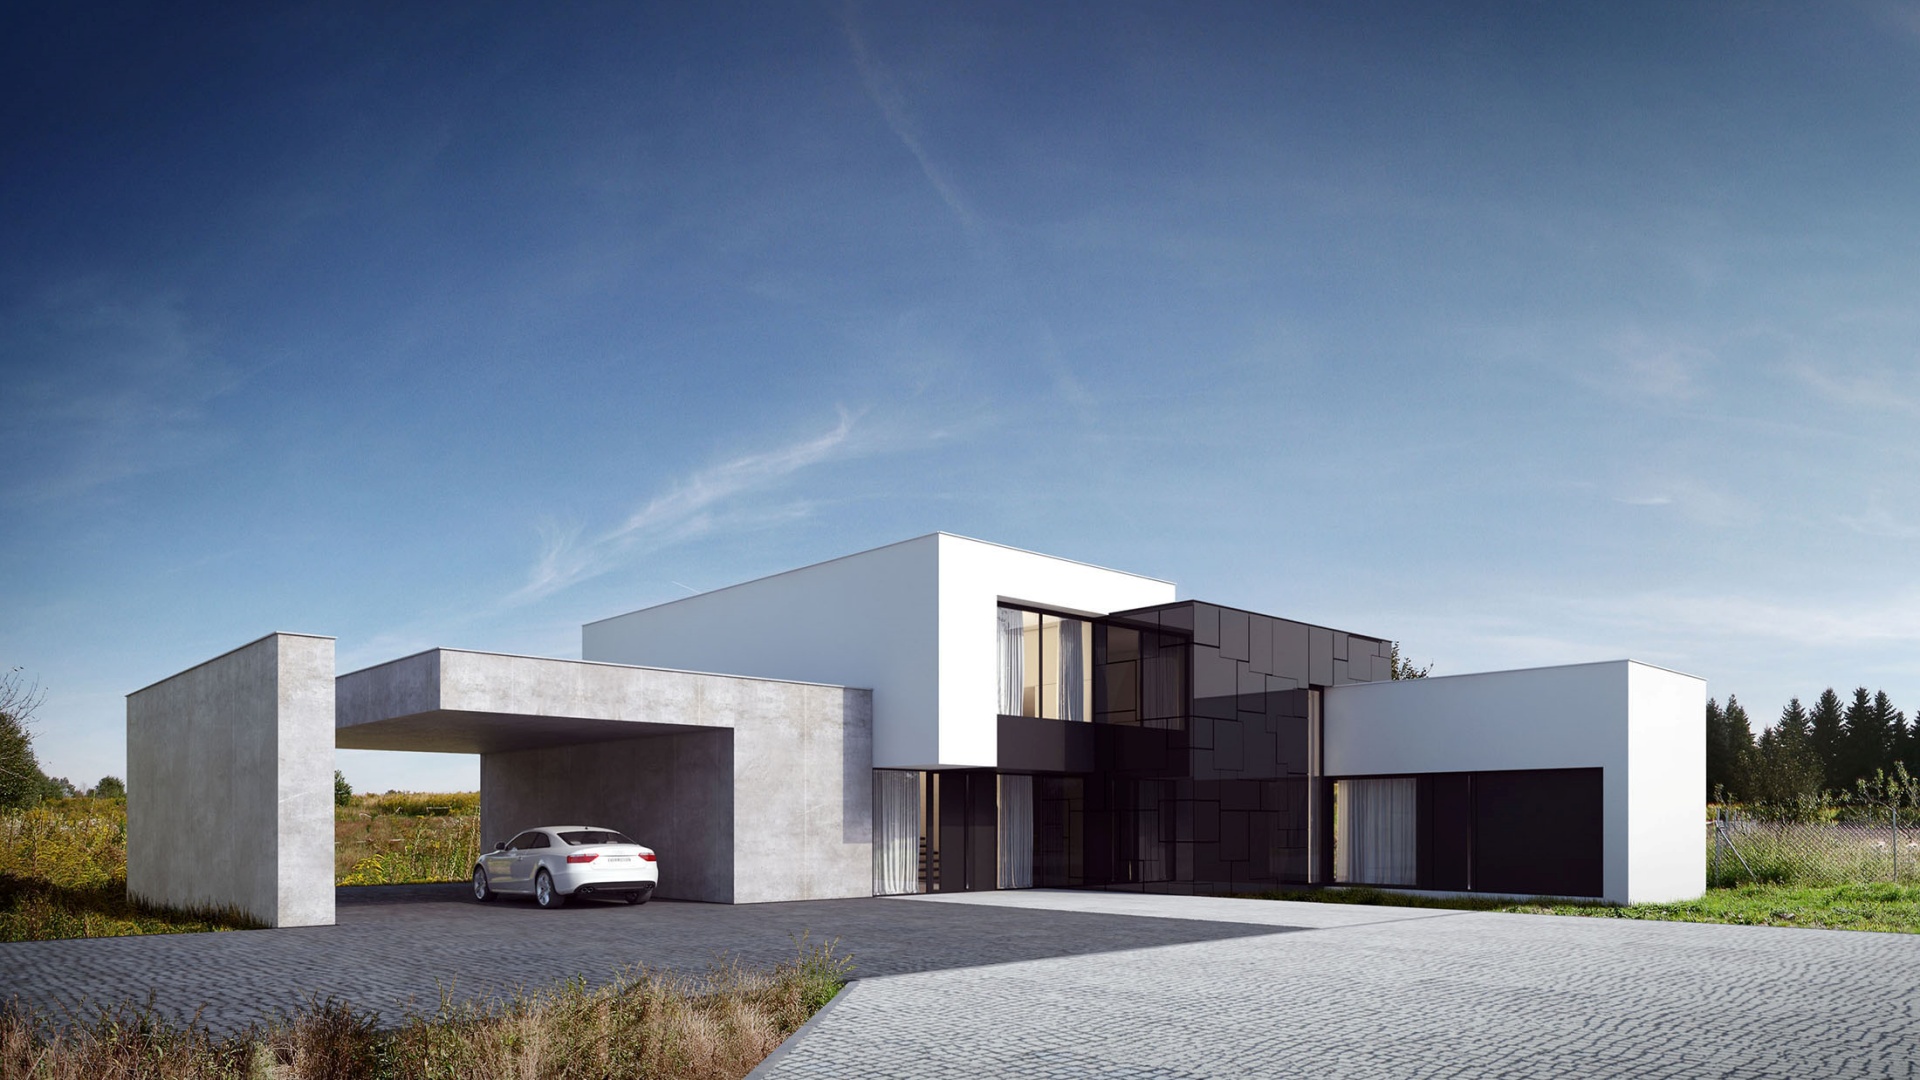 RE: BLACK MIRROR HOUSE 2.0 projektu architekta Marcina Tomaszewskiego REFORM Architekt